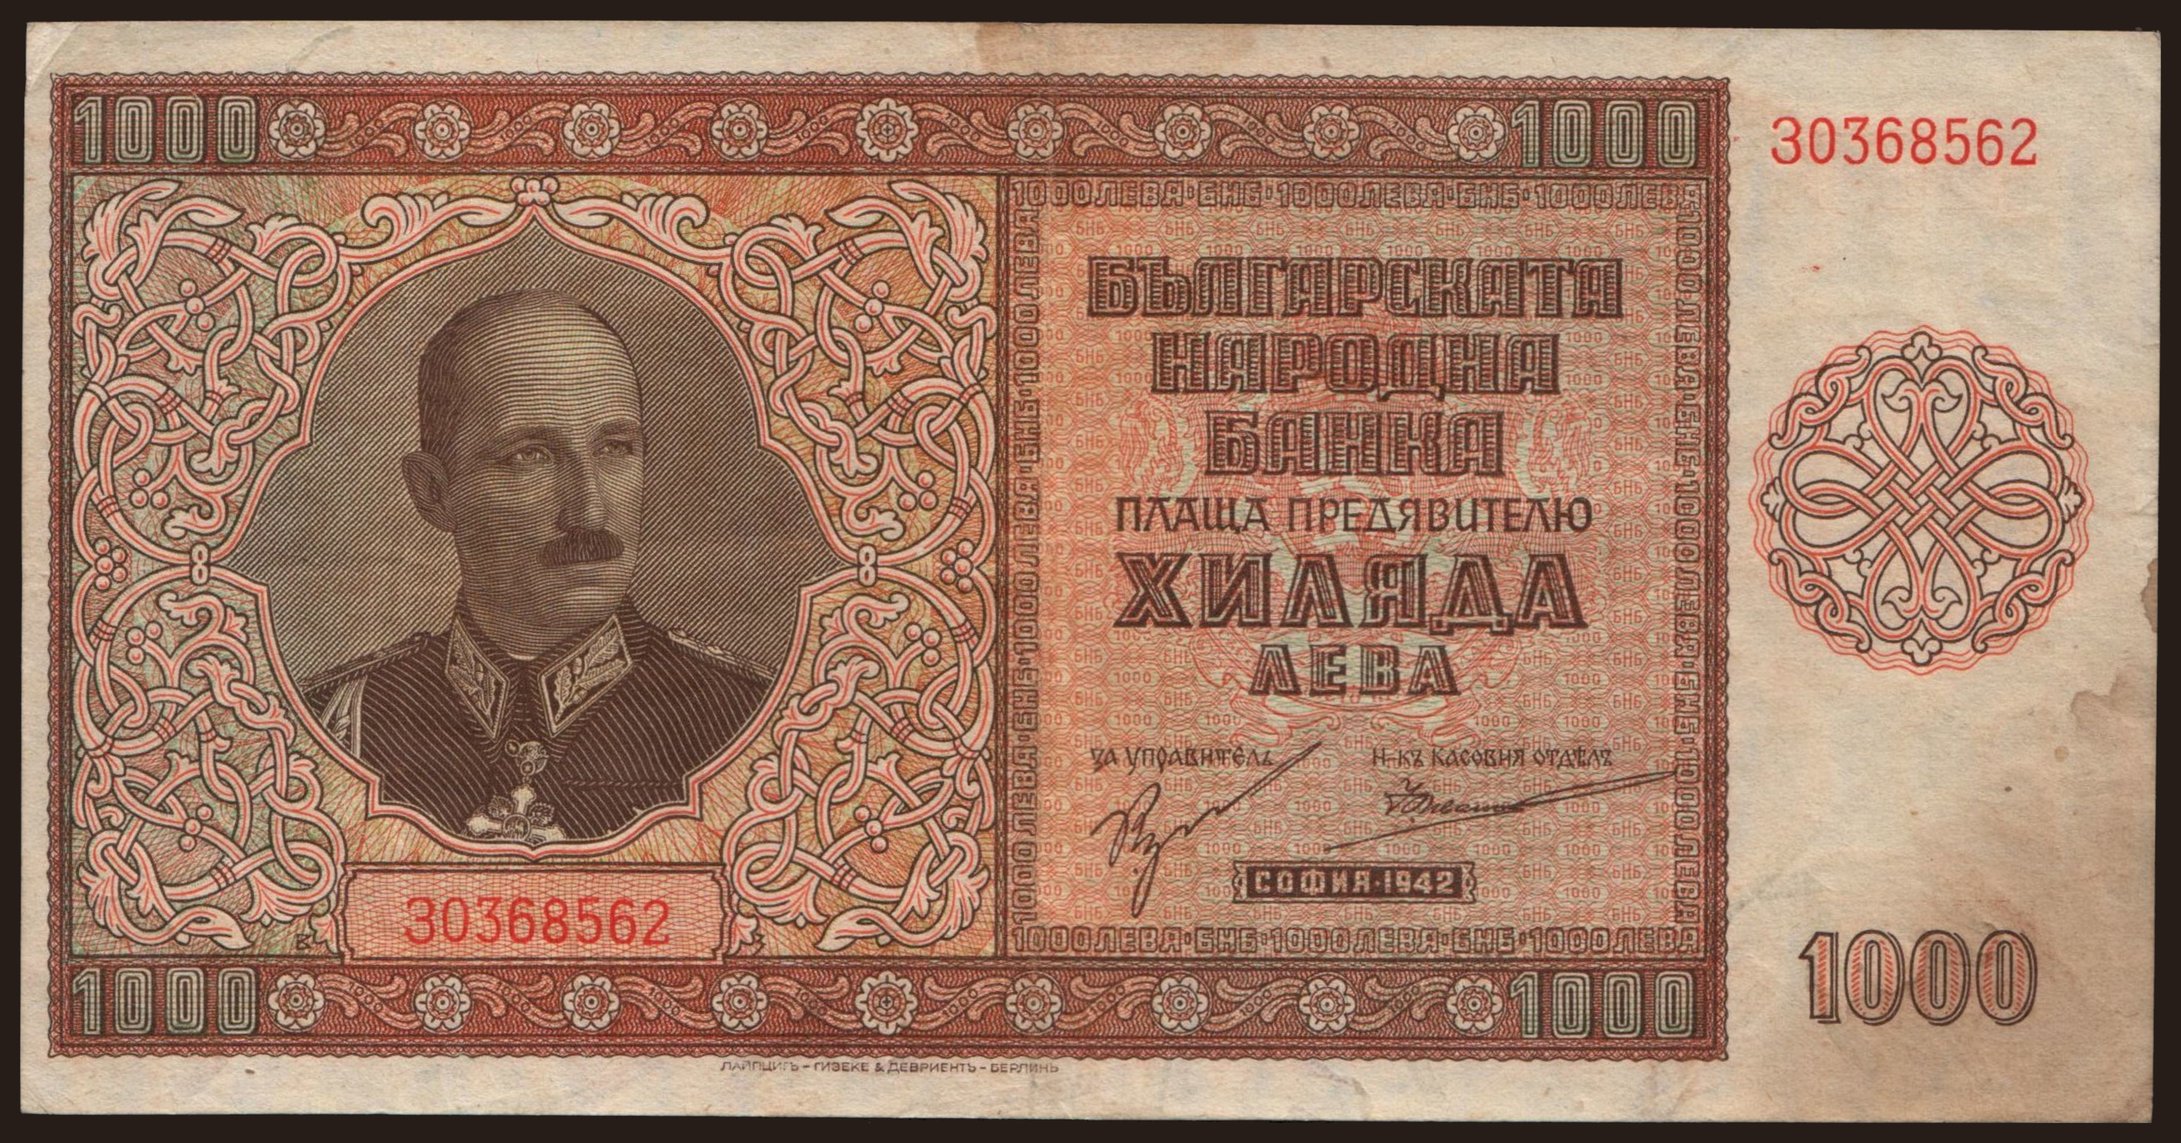 1000 leva, 1942